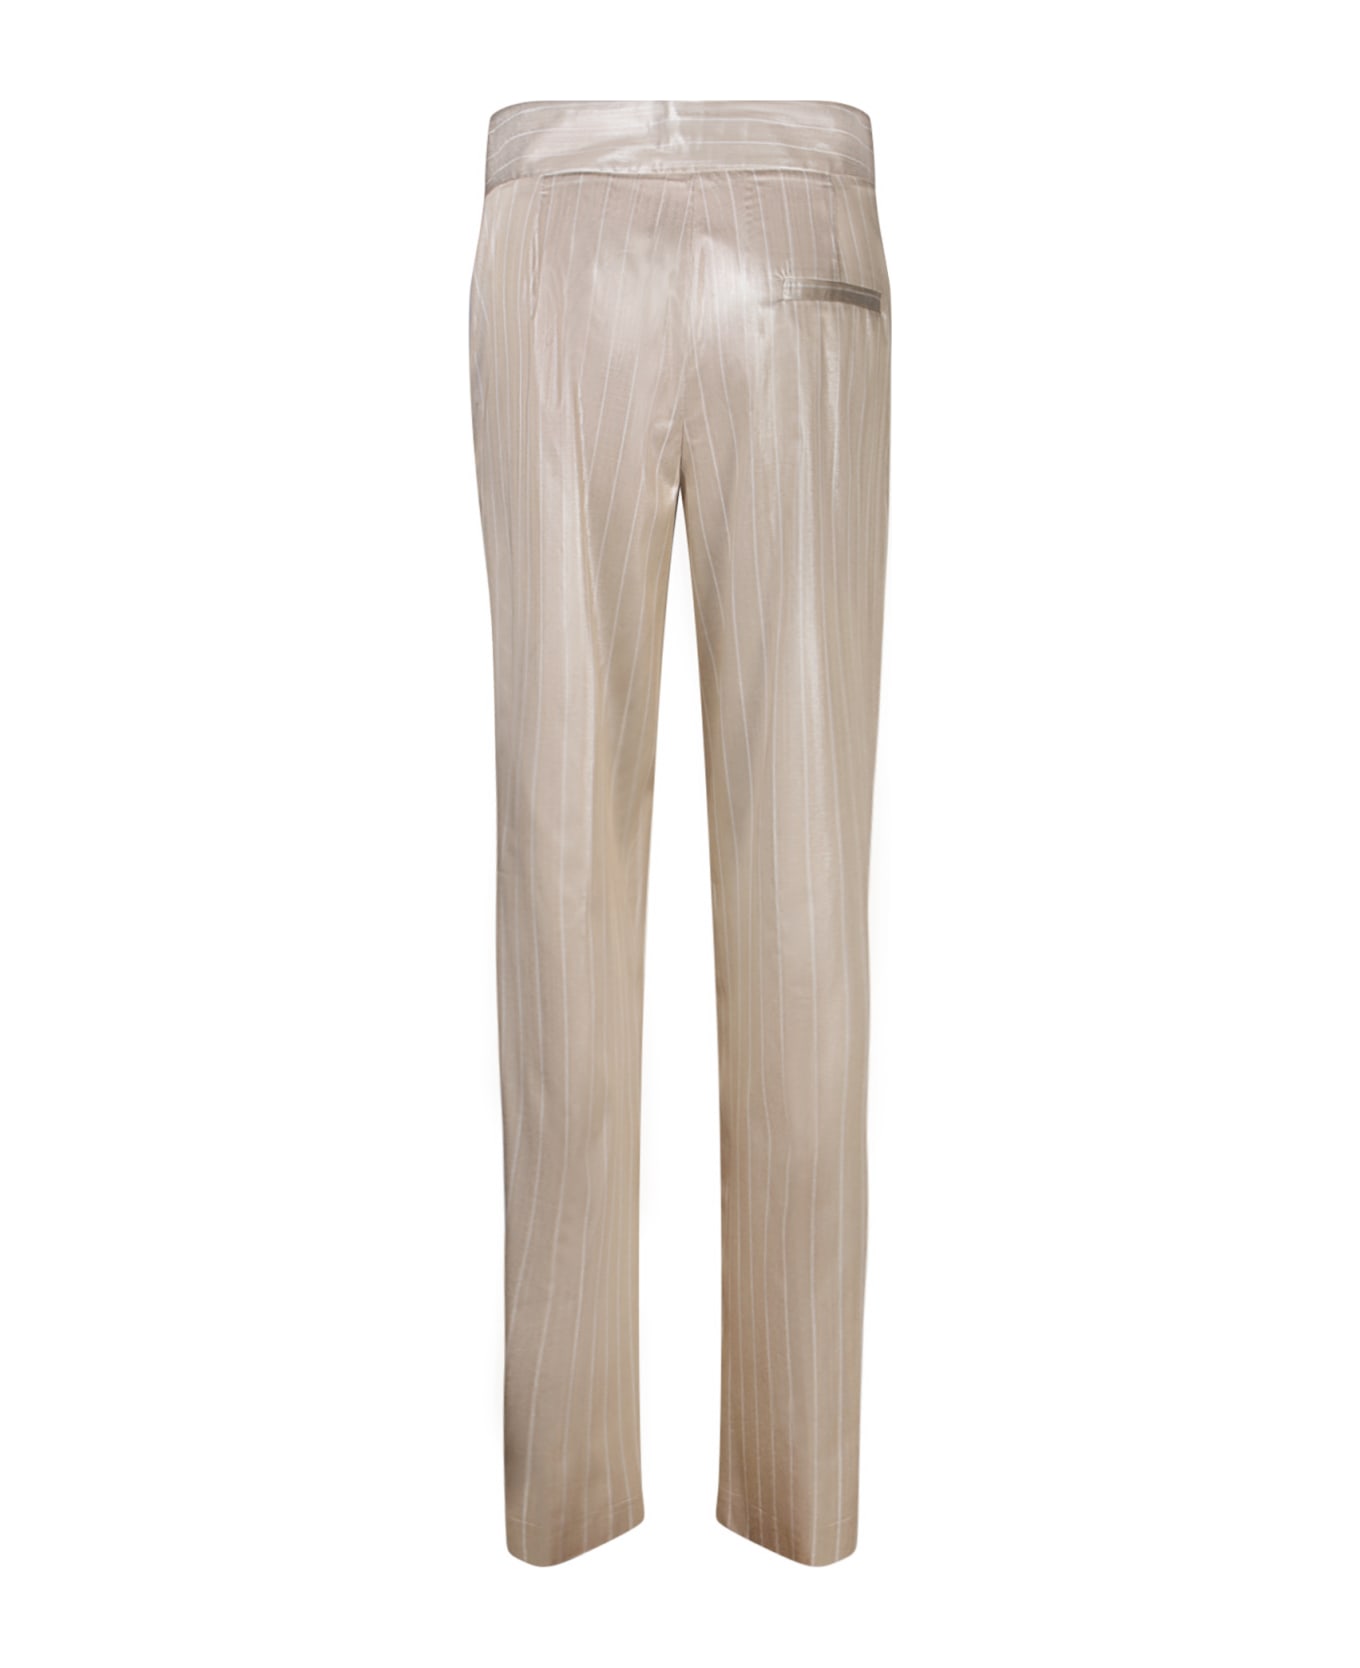 Genny Satin Striped Sand Trousers - Beige